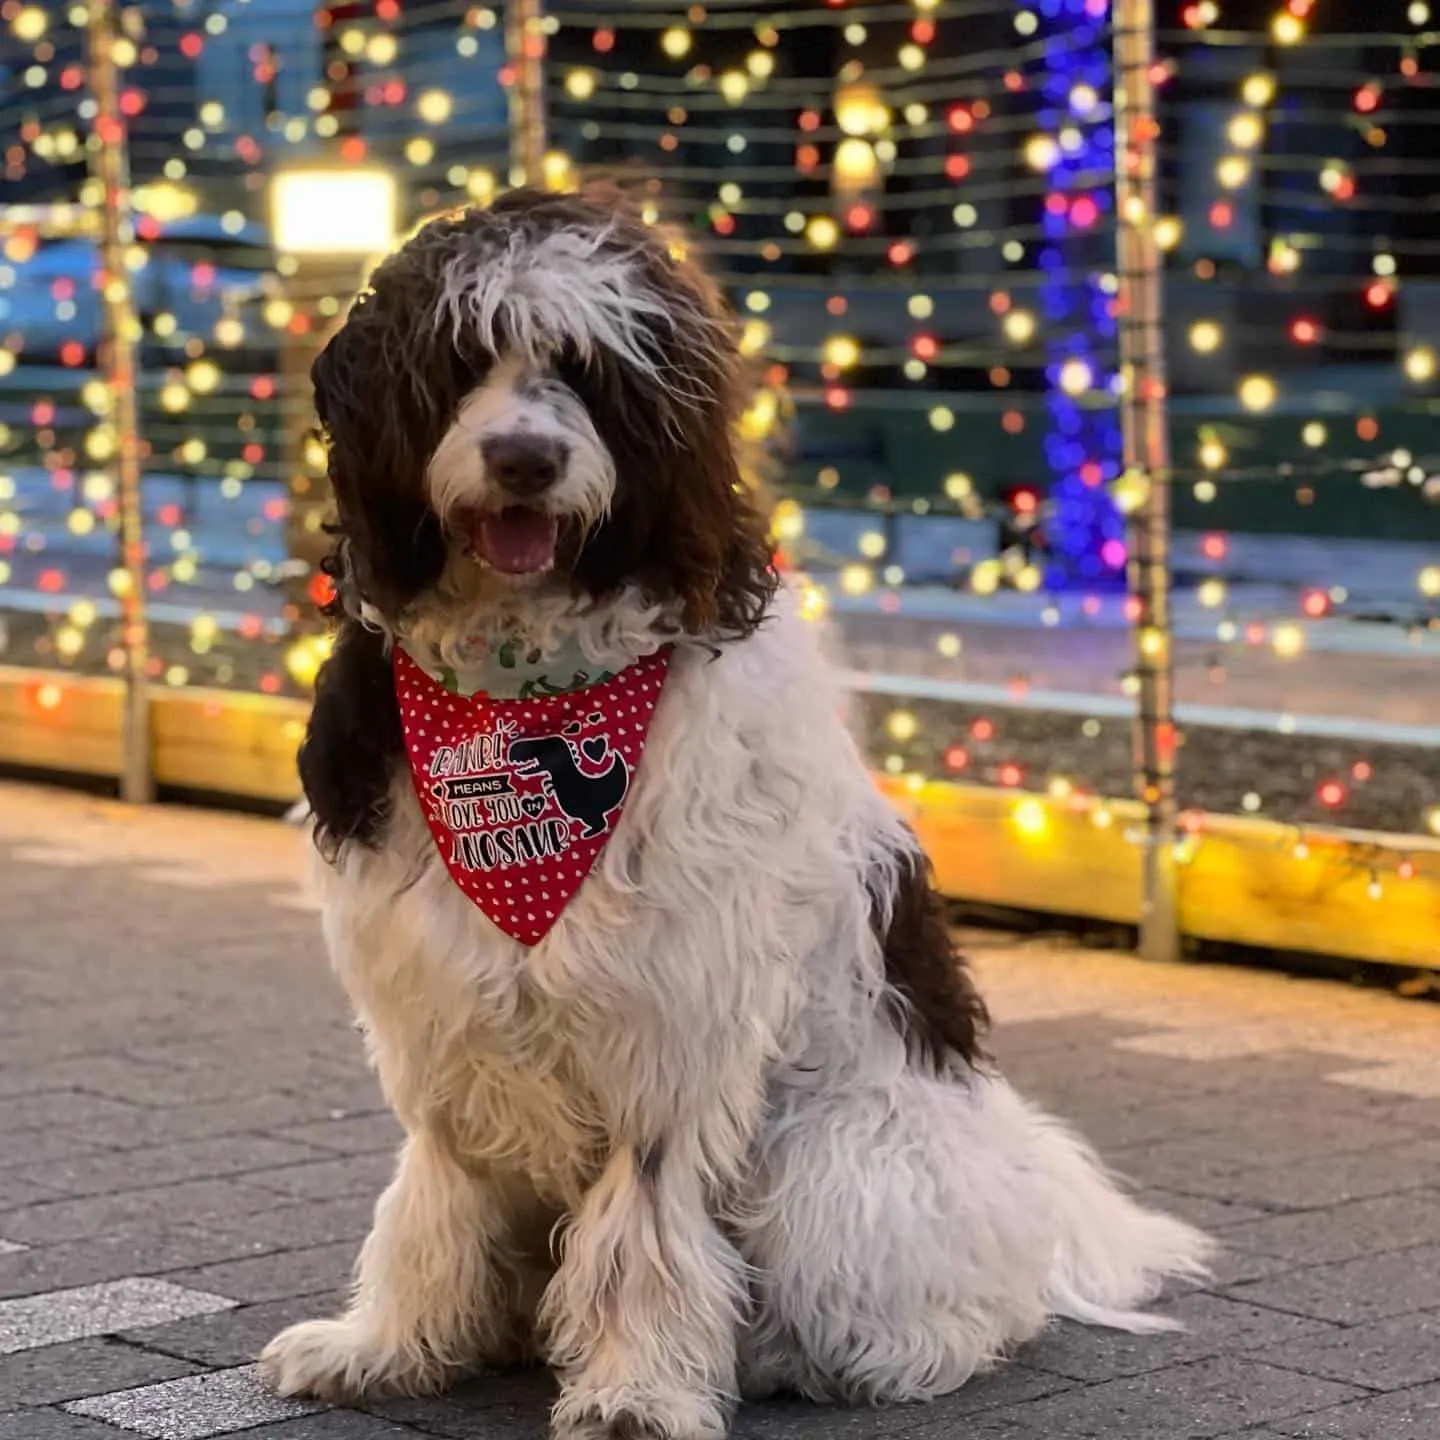 newfypoo dog sitting in front of lights